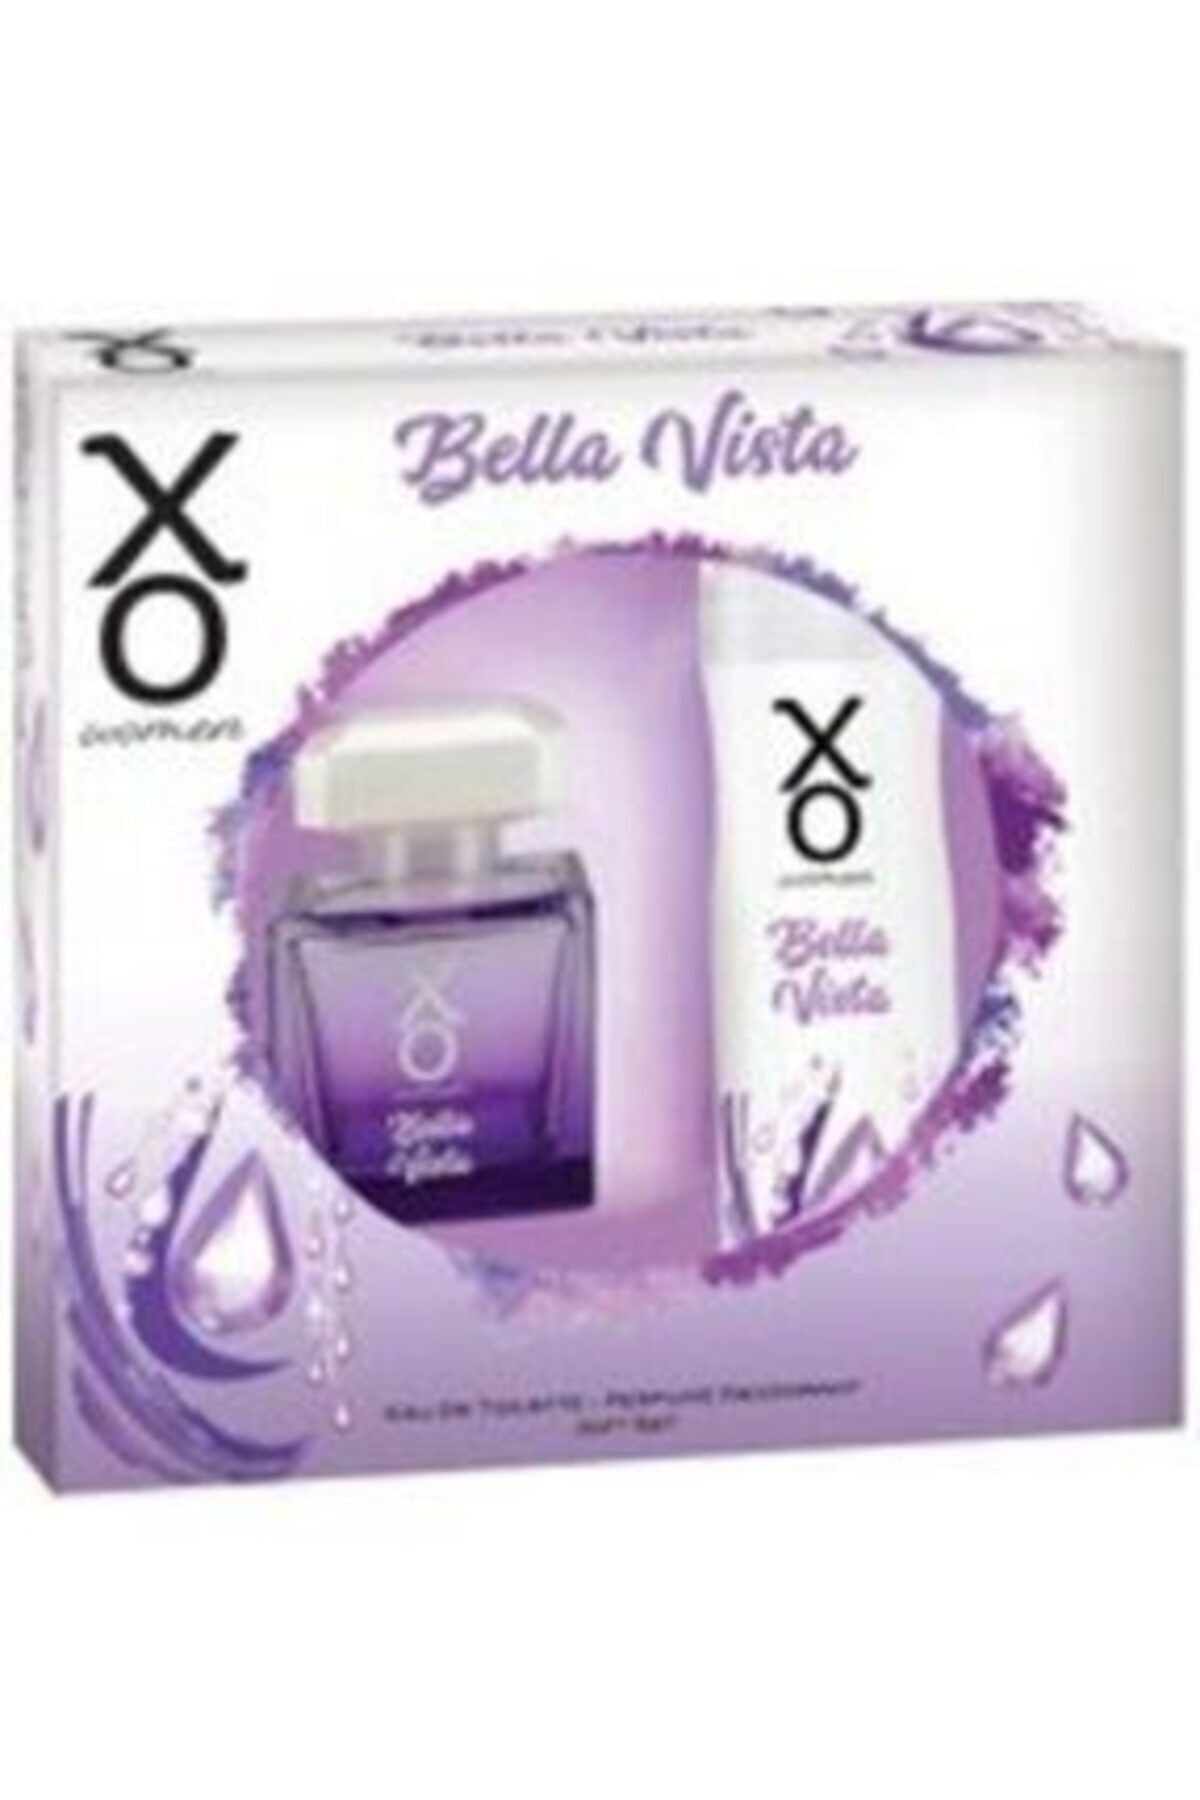 Xo Bella Vista Edt 100 ml Kadın Parfüm + 125 ml Deodorant Ikili Set 258364587123